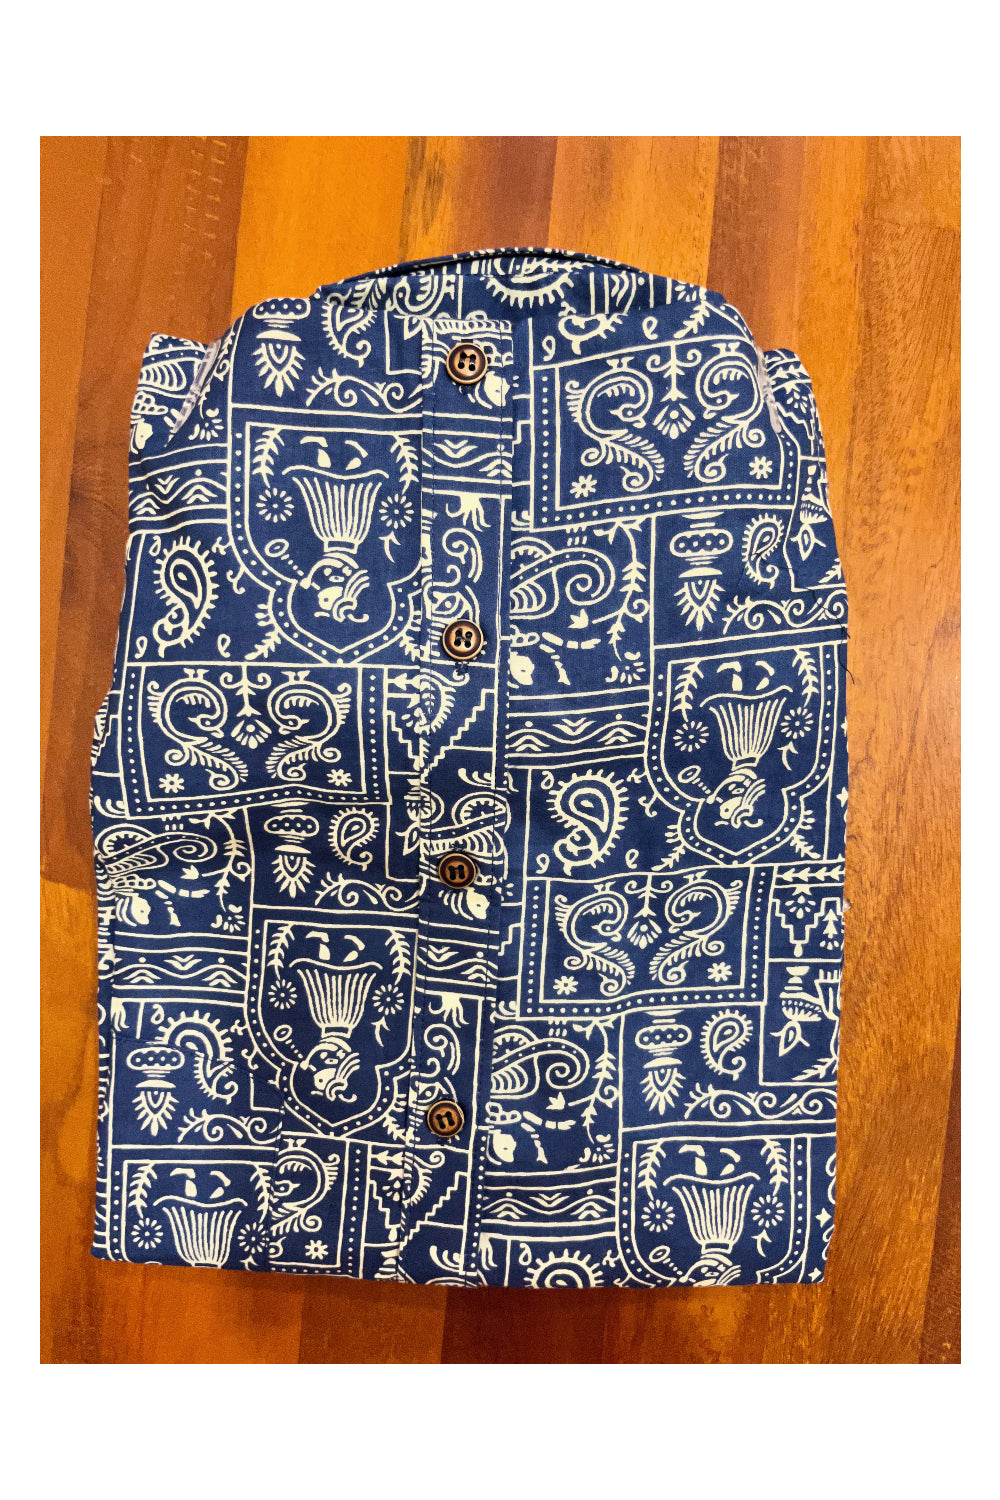 Southloom Jaipur Cotton Blue Hand Block Printed Shirt (Half Sleeves)